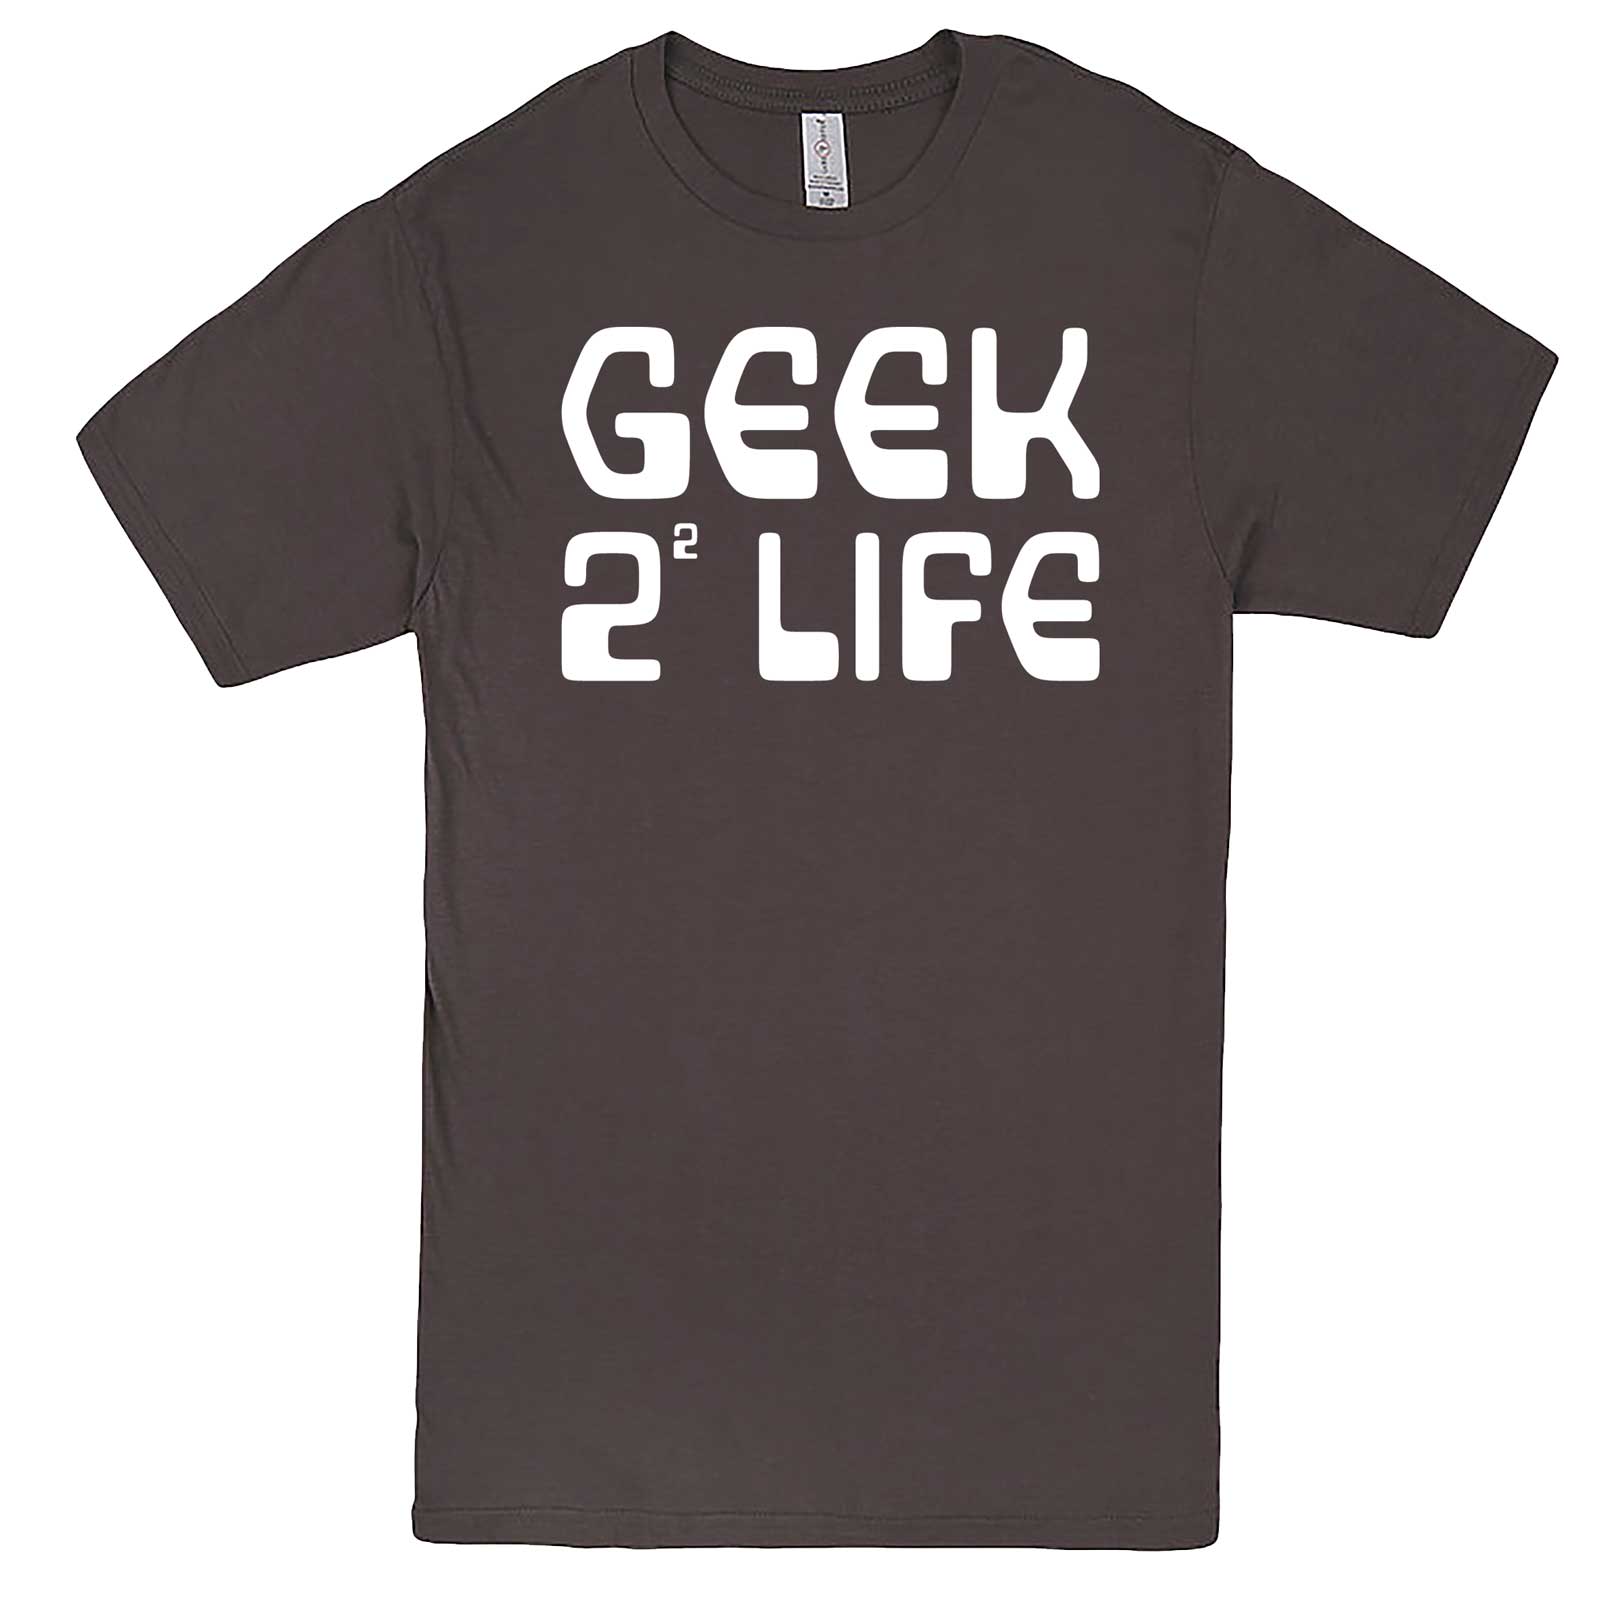 Geek 4 Life" men's t-shirt – Minty Tees